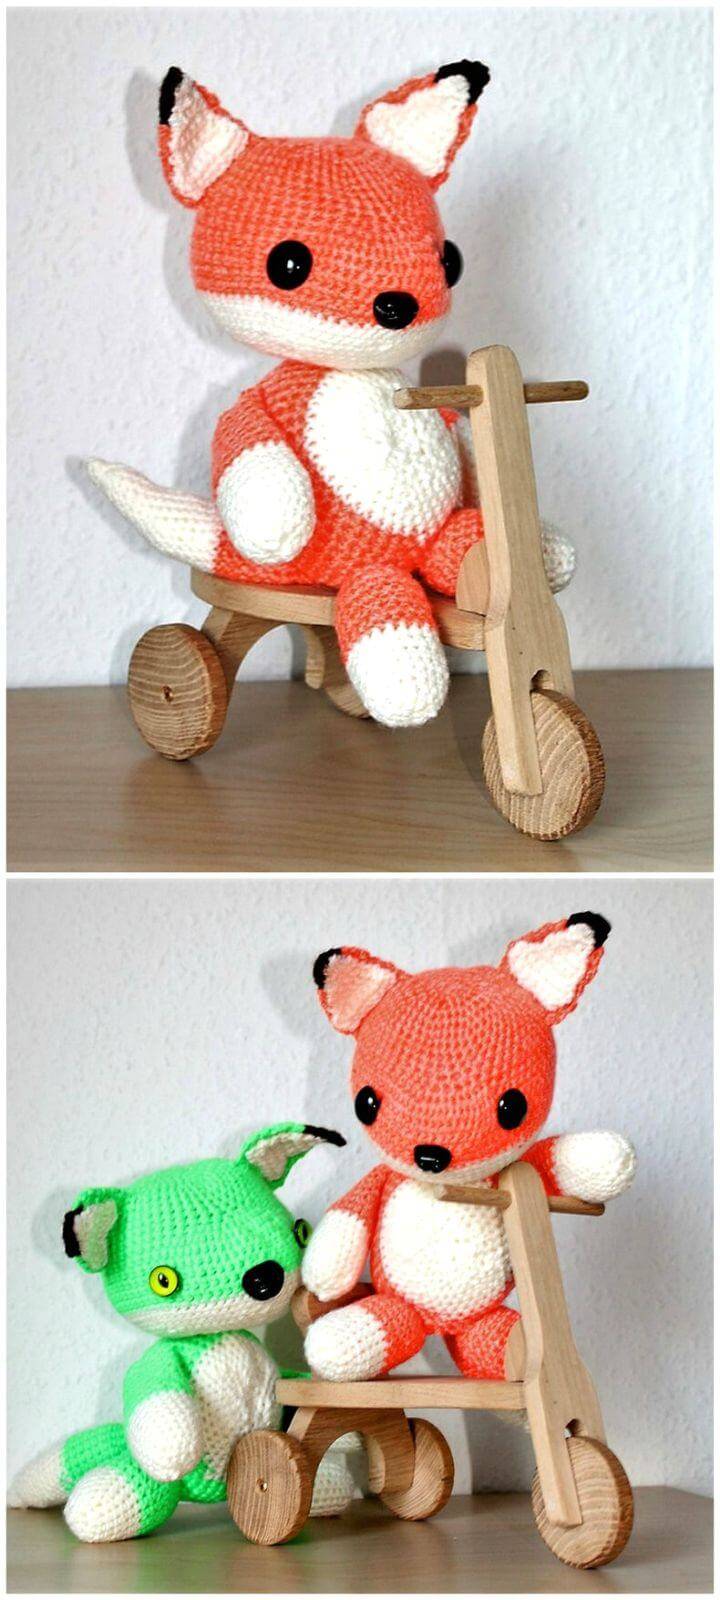 Crochet Easy And Adorable - Free Fox Amigurumi Pattern